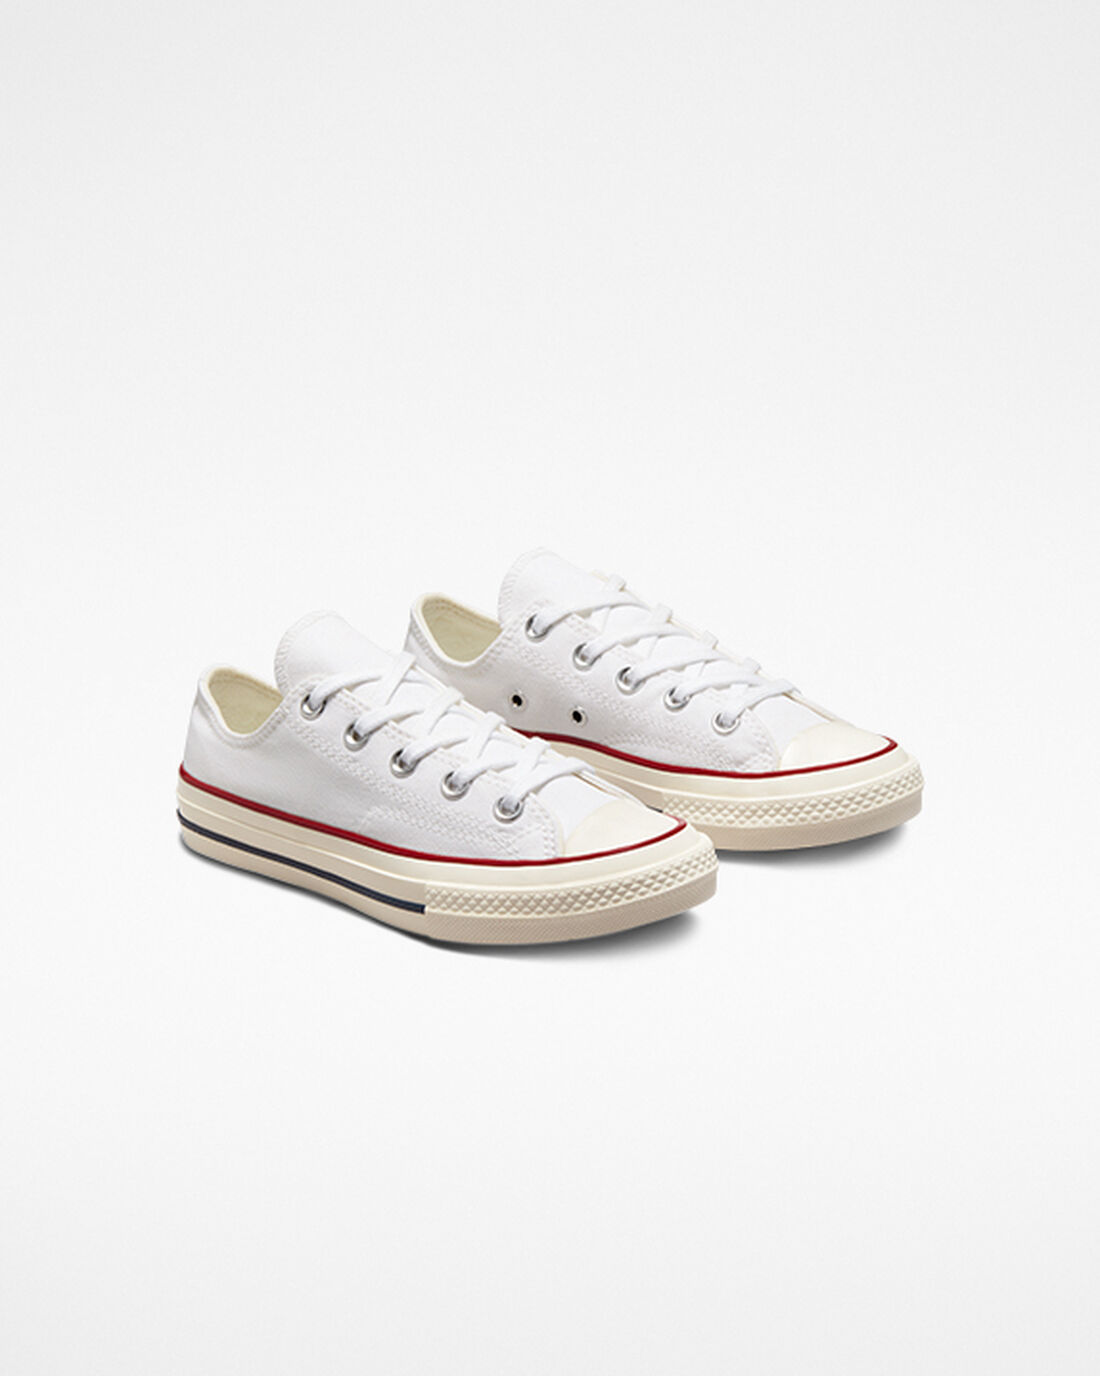 Boys' Converse Chuck 70 Vintage Canvas Sneakers White/Dark Red | Australia-87021